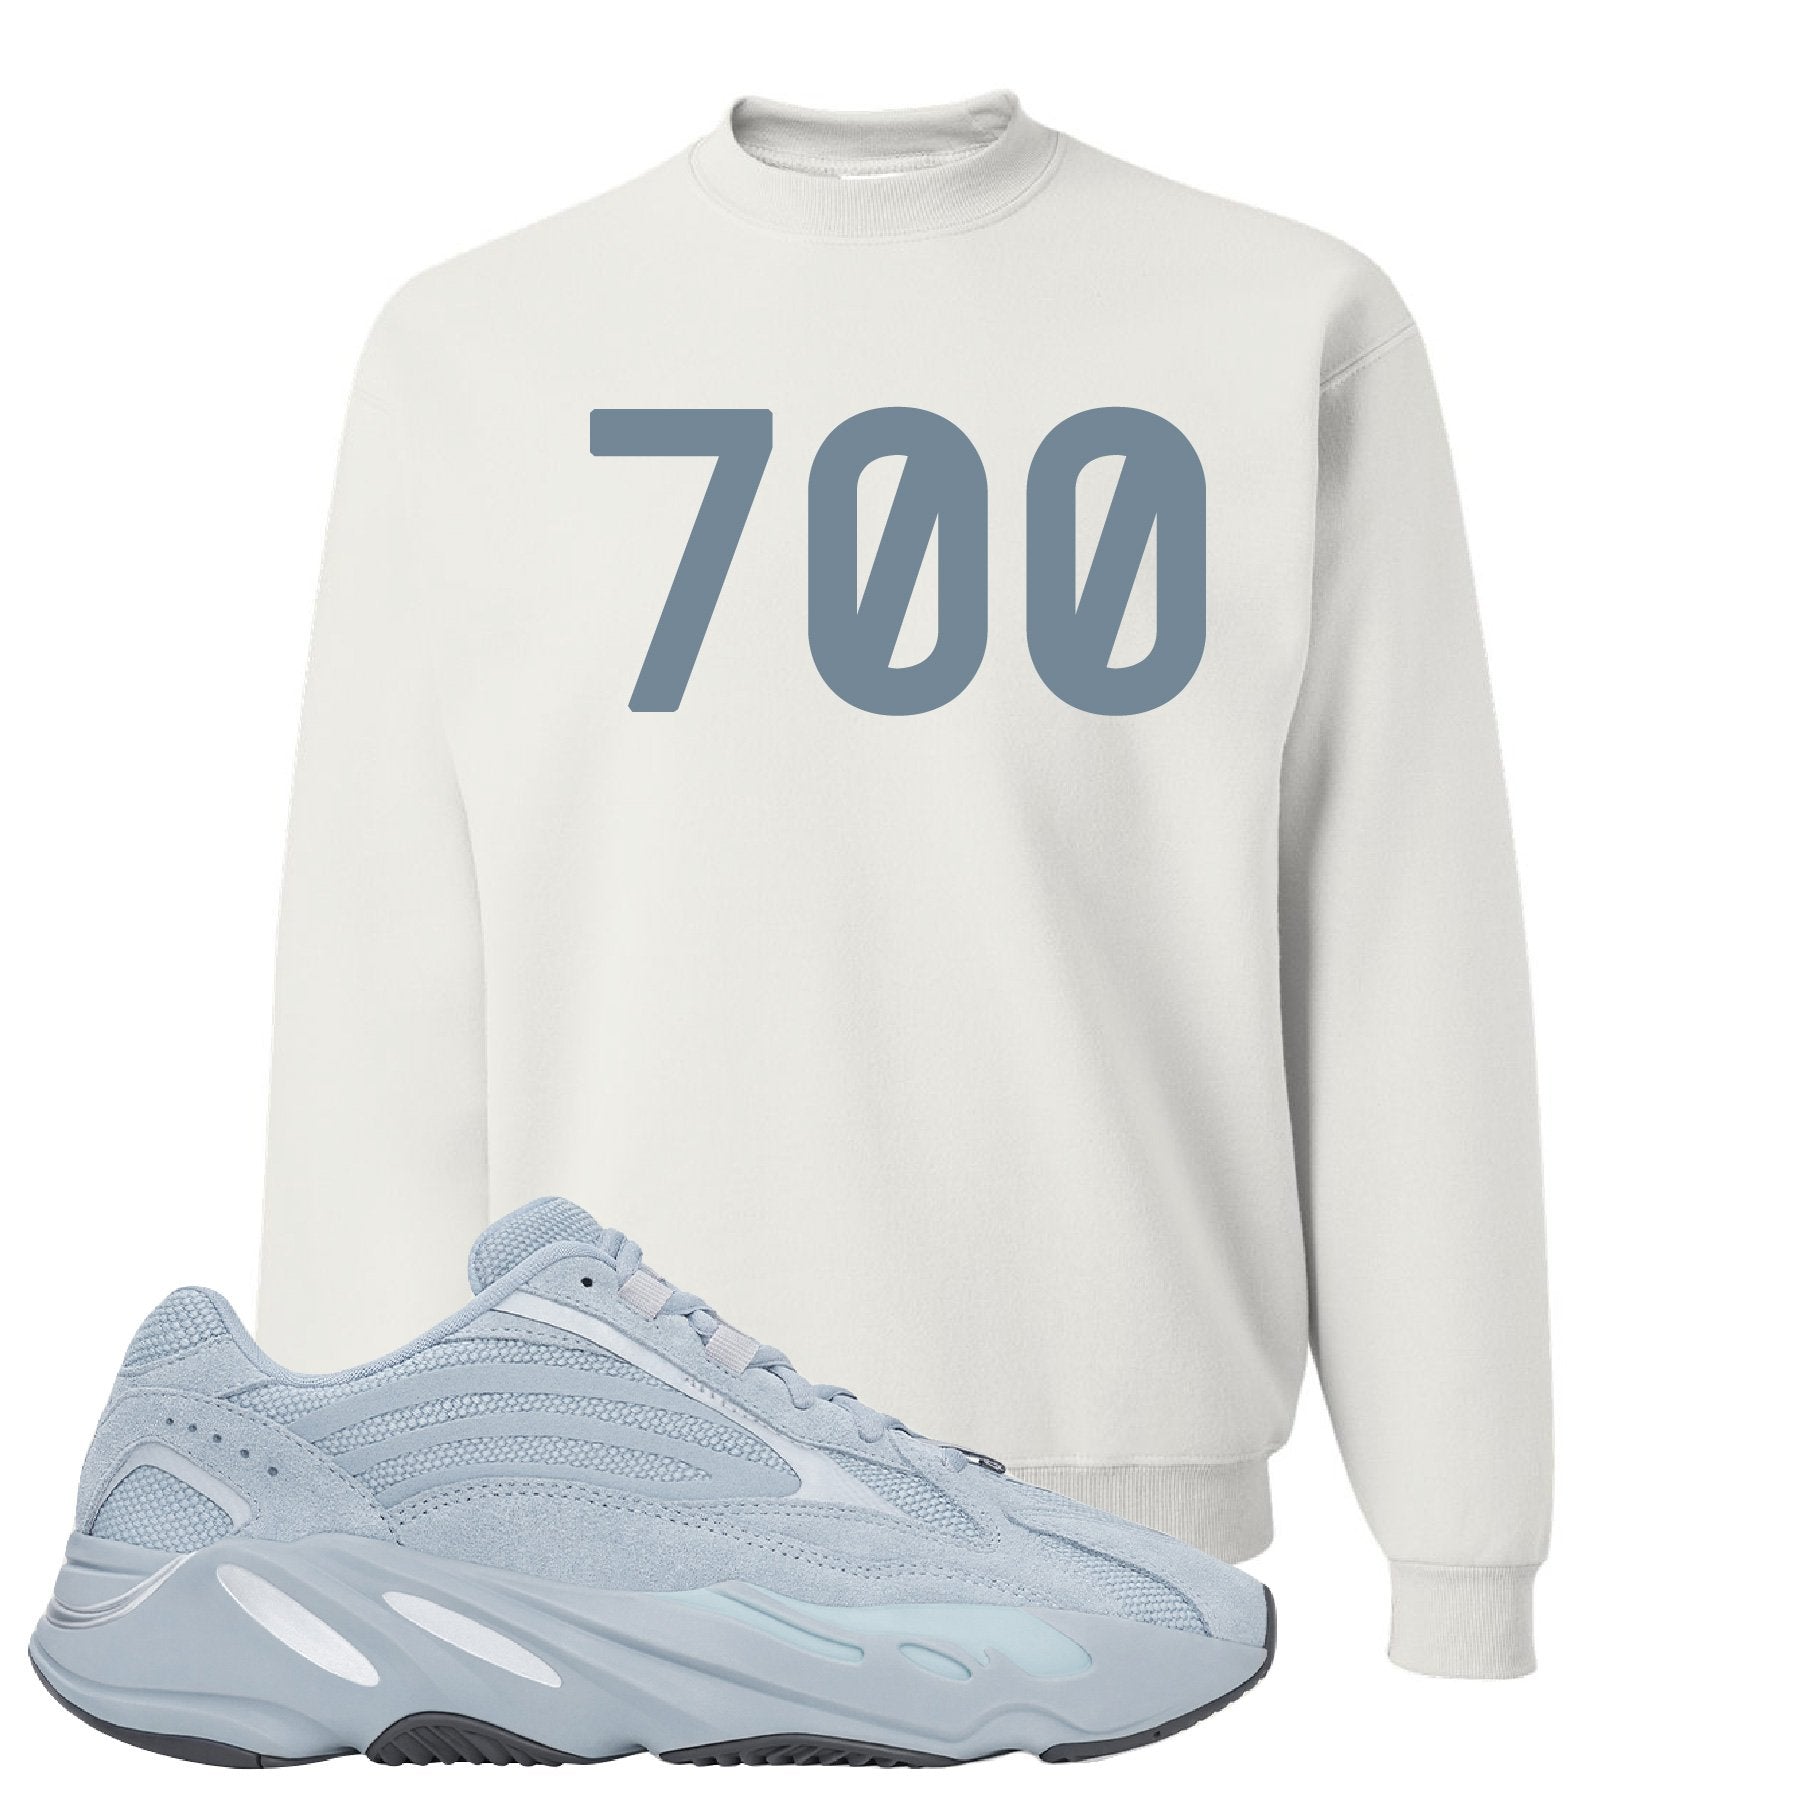 Yeezy Boost 700 V2 Hospital Blue 700 Sneaker Matching White Crewneck Sweatshirt